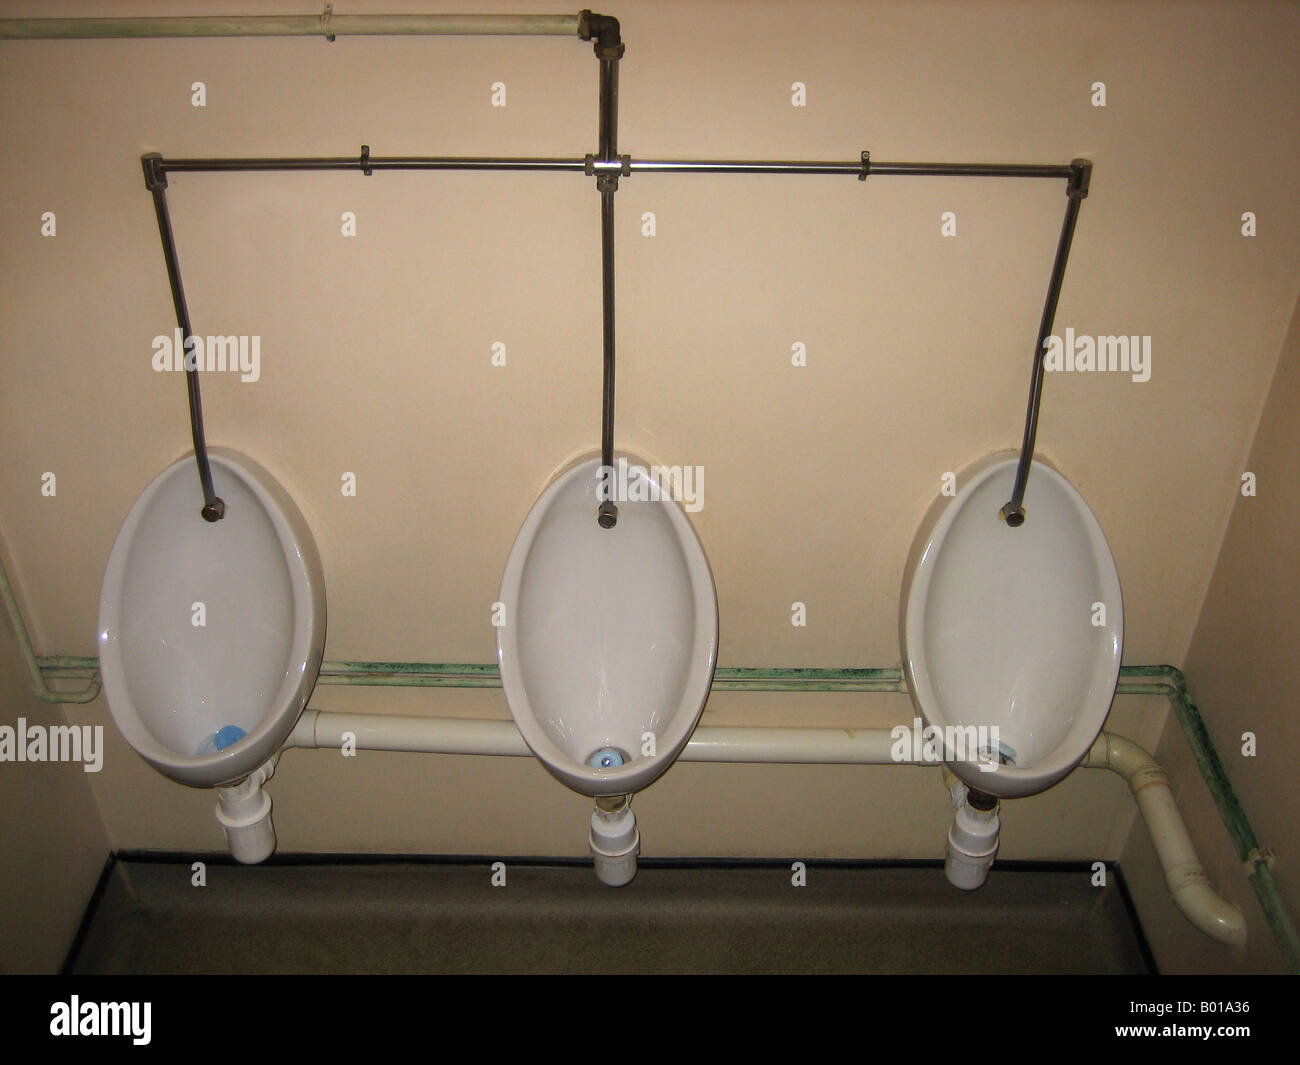 three mens urinals in toilet block Stock Photo - Alamy